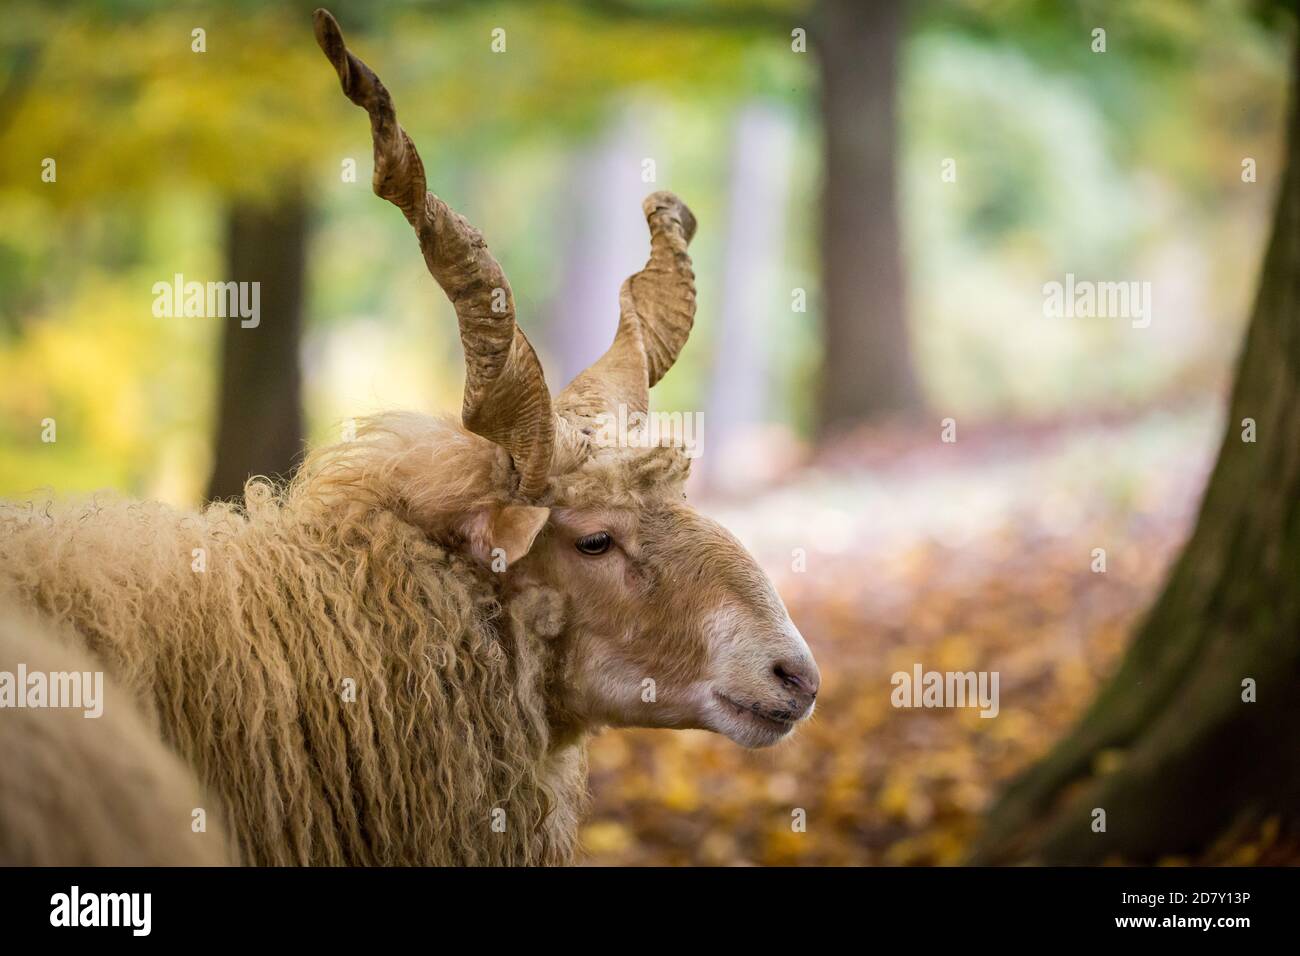 'Wallachian sheep' (Zackelshaf, Racka), an historic and endangered sheep breed from Hungary Stock Photo